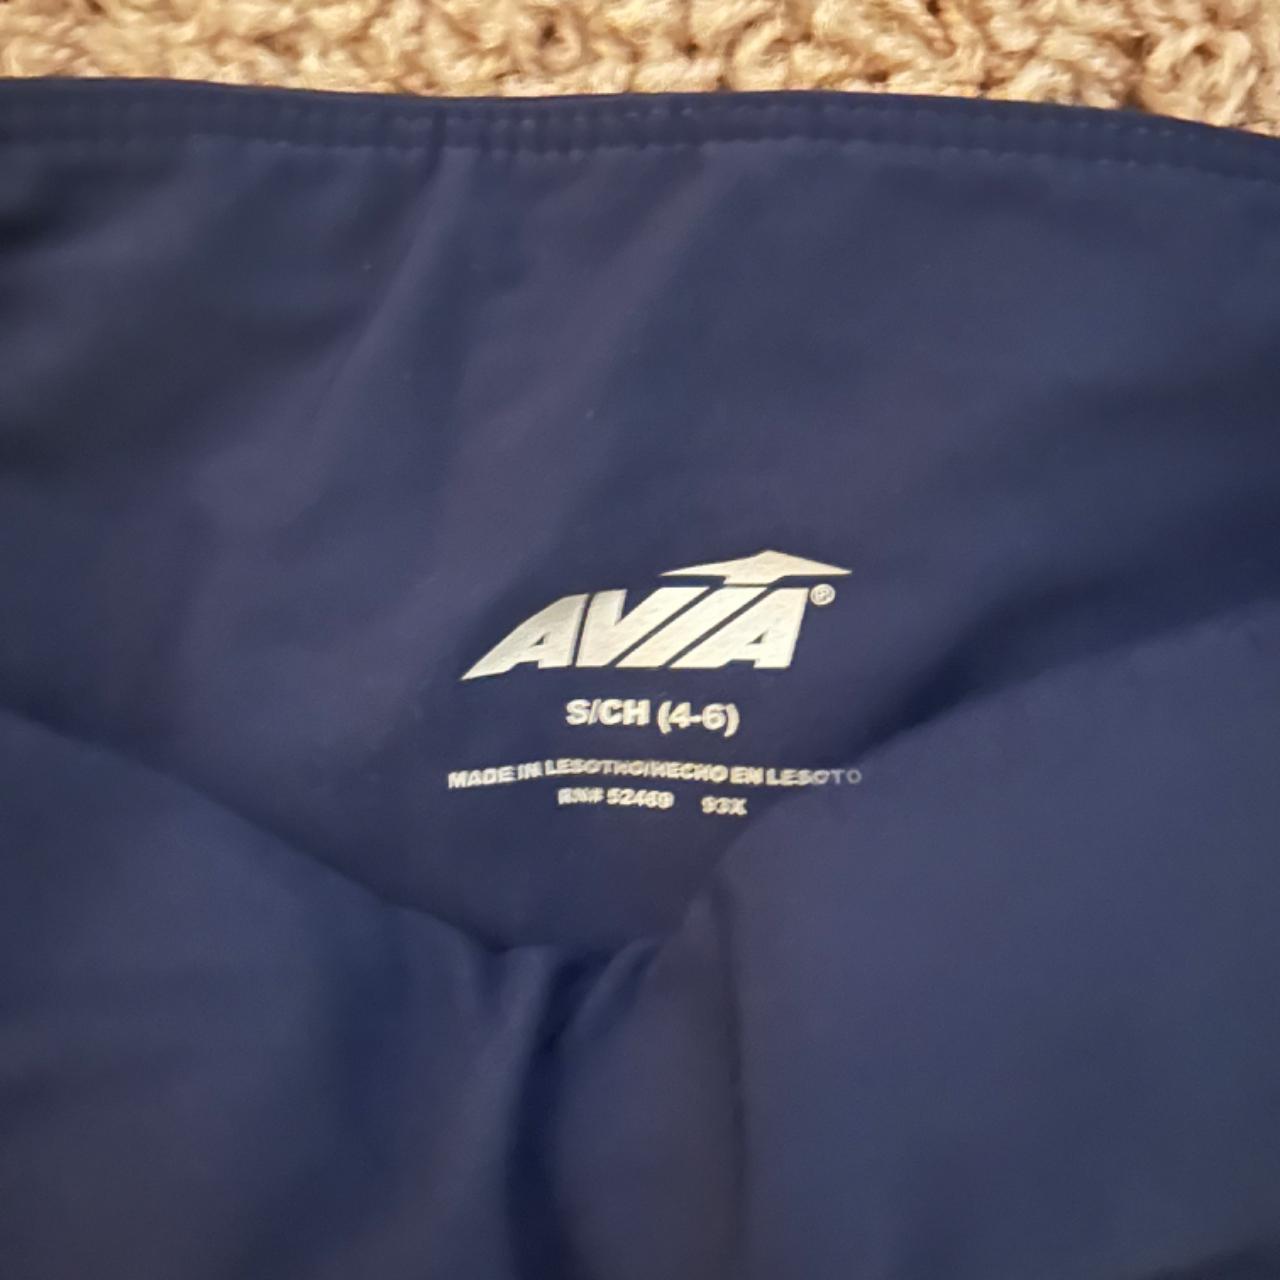 Avia leggings. Size 8-10 medium. New with tags. - Depop